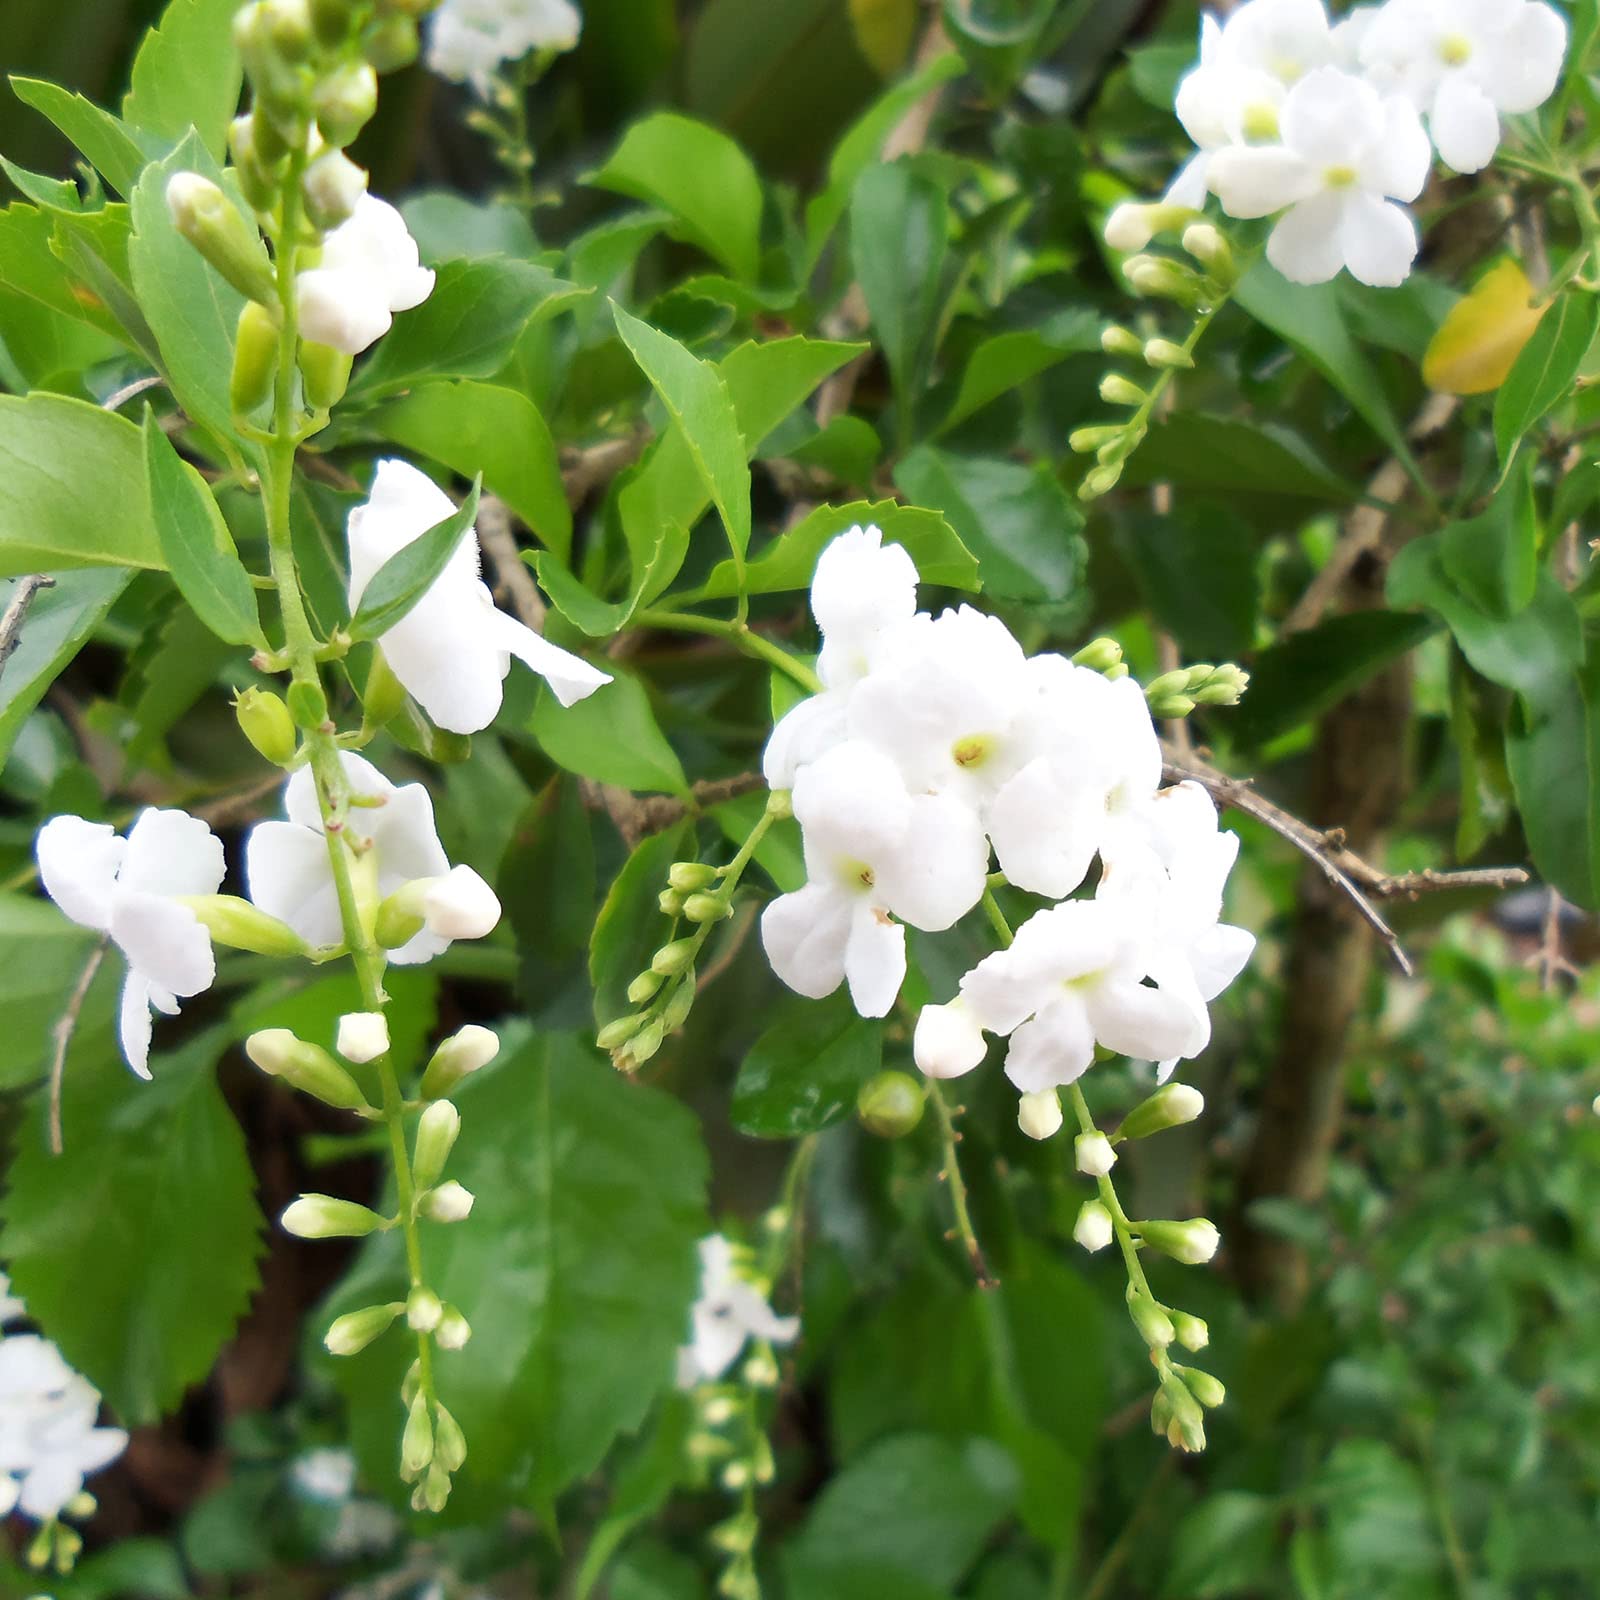 Duranta Erecta White Flower with Green Leaves Ornamental Live Plant